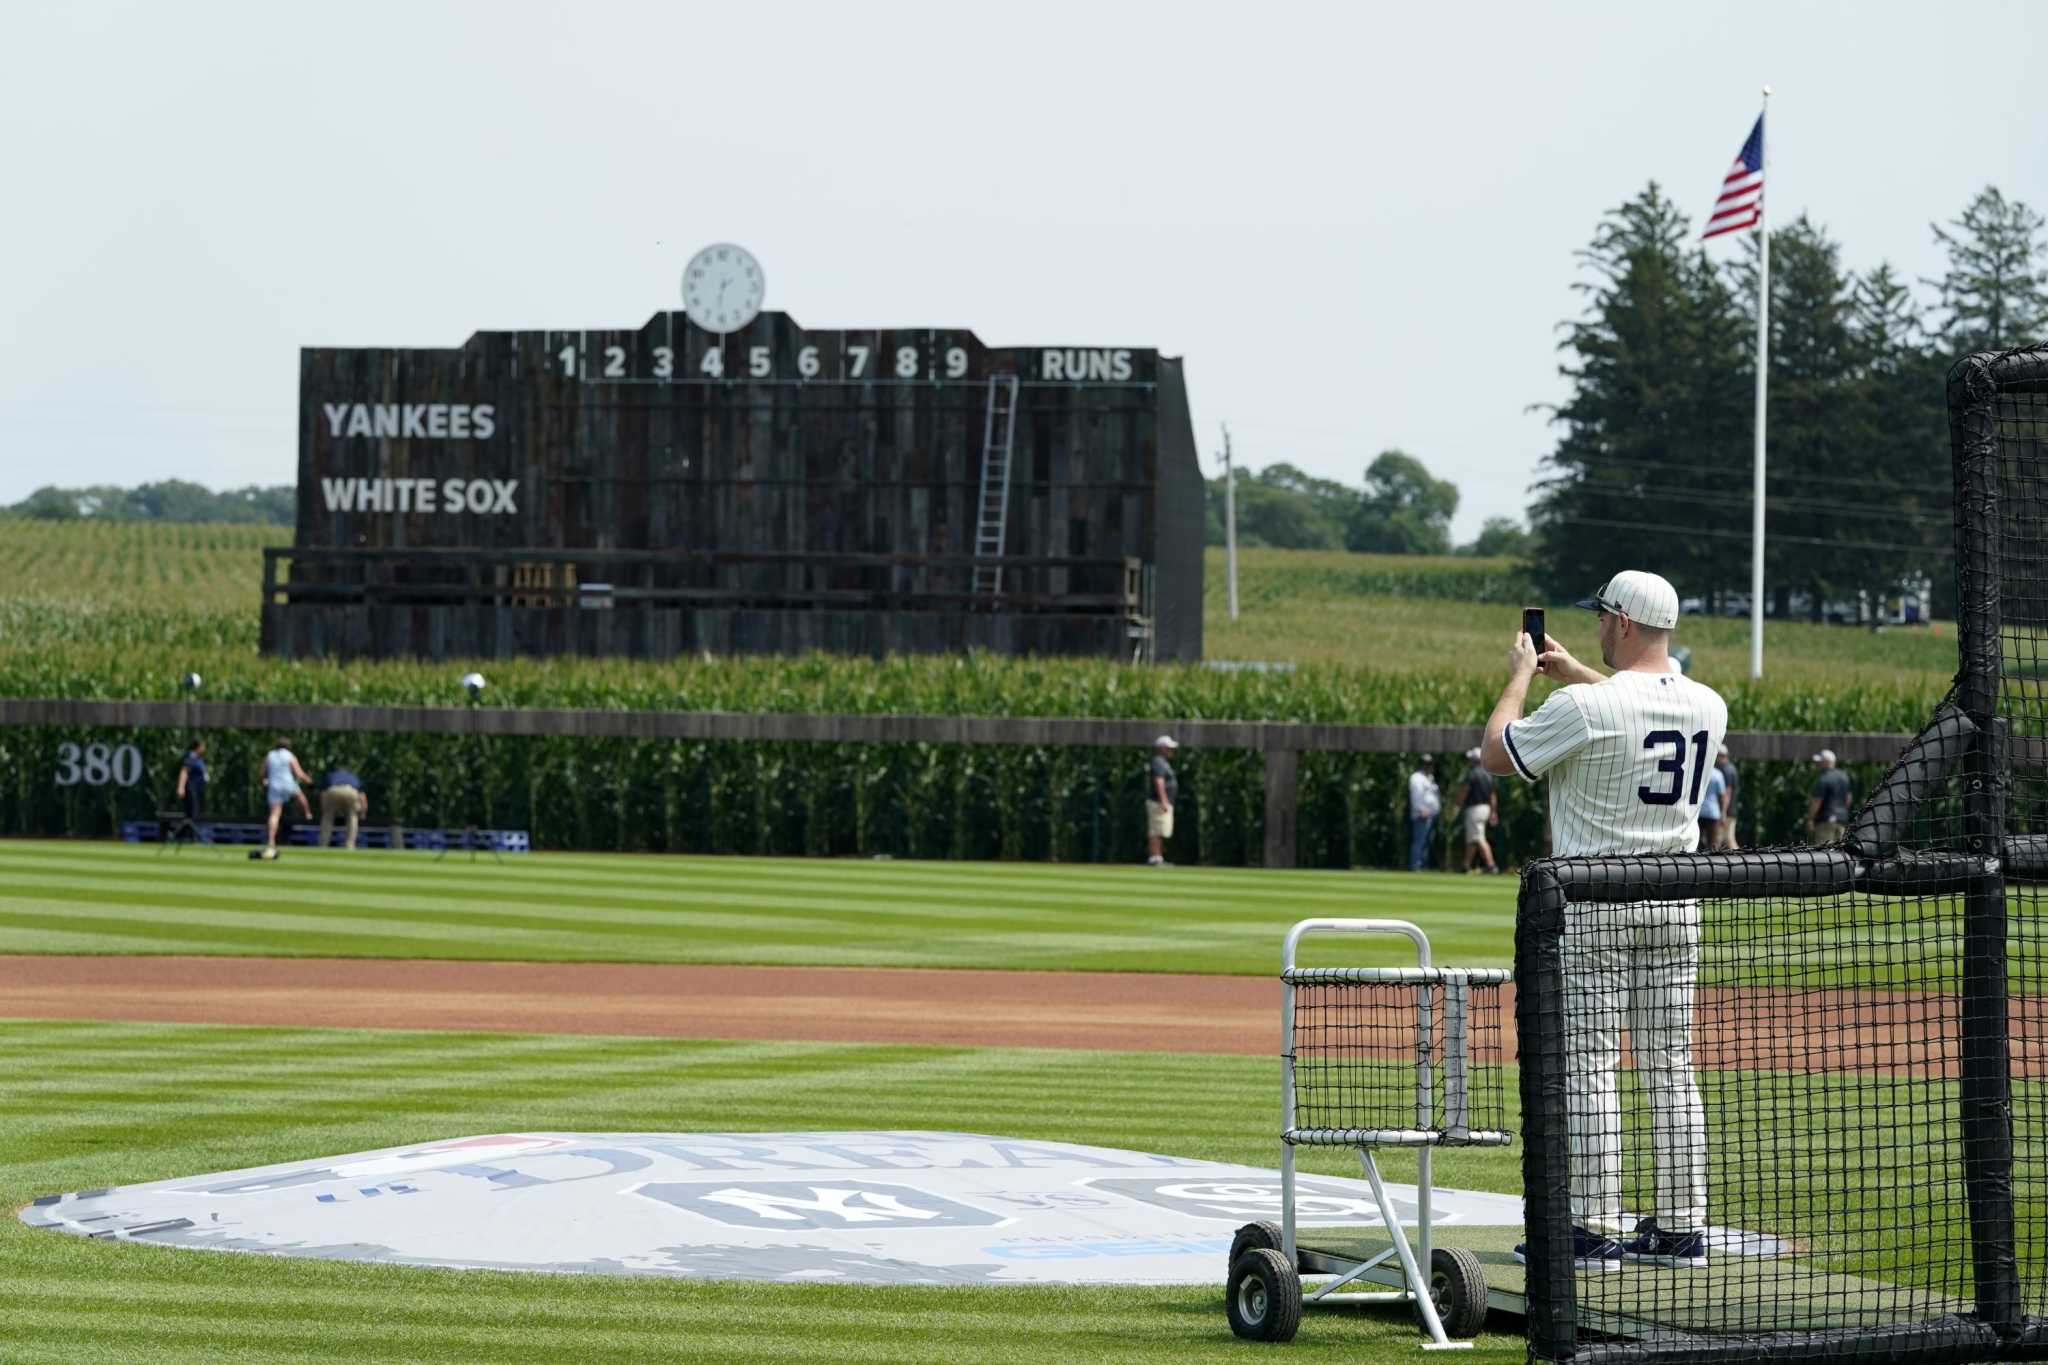 White Sox, Yankees to play at Iowa's Field of Dreams next season